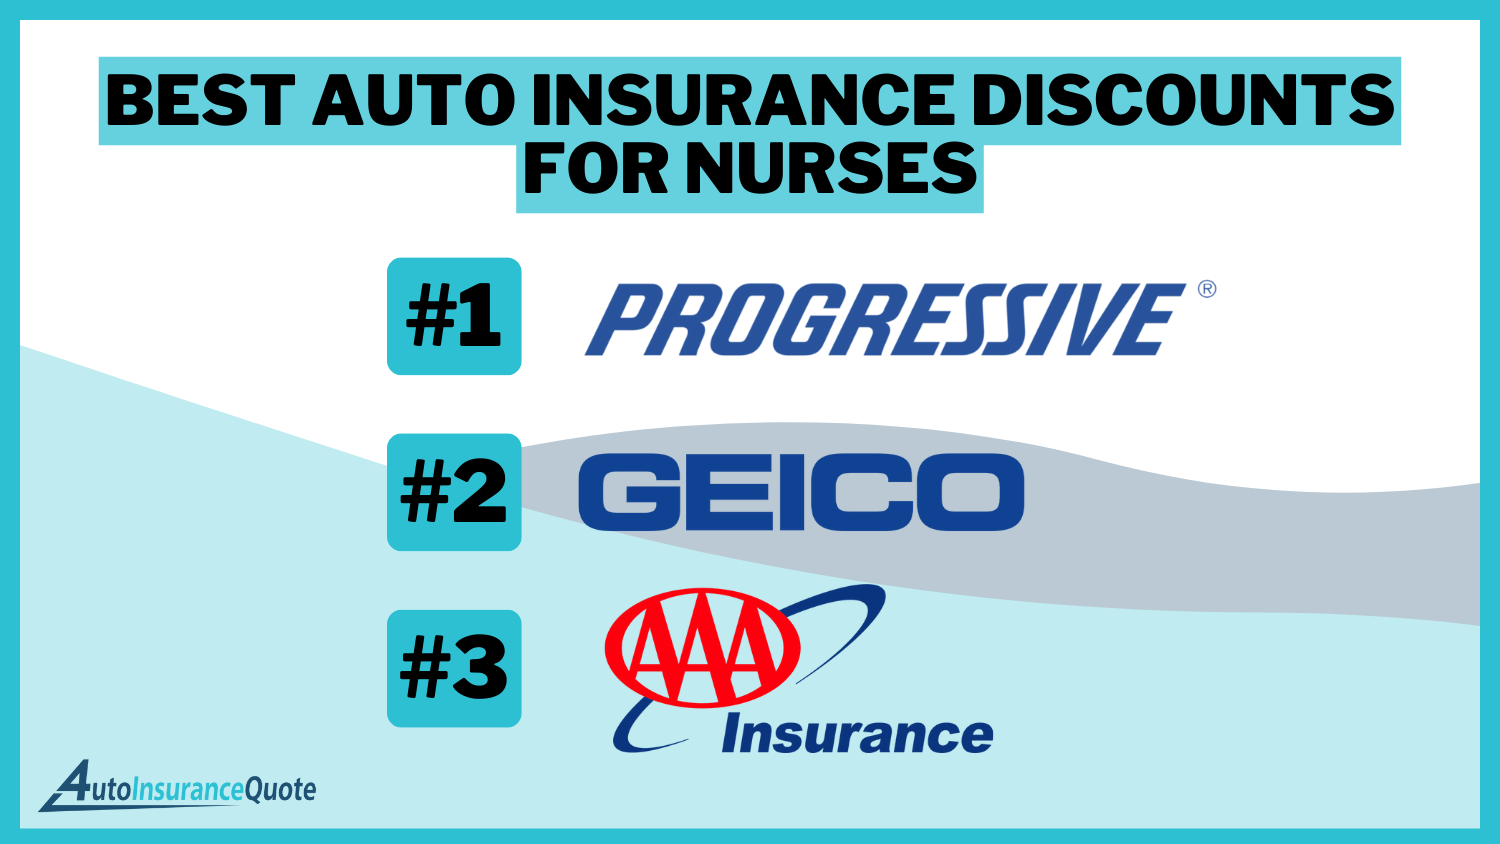 Best Auto Insurance Discounts for Nurses: Progressive, Geico, and AAA.